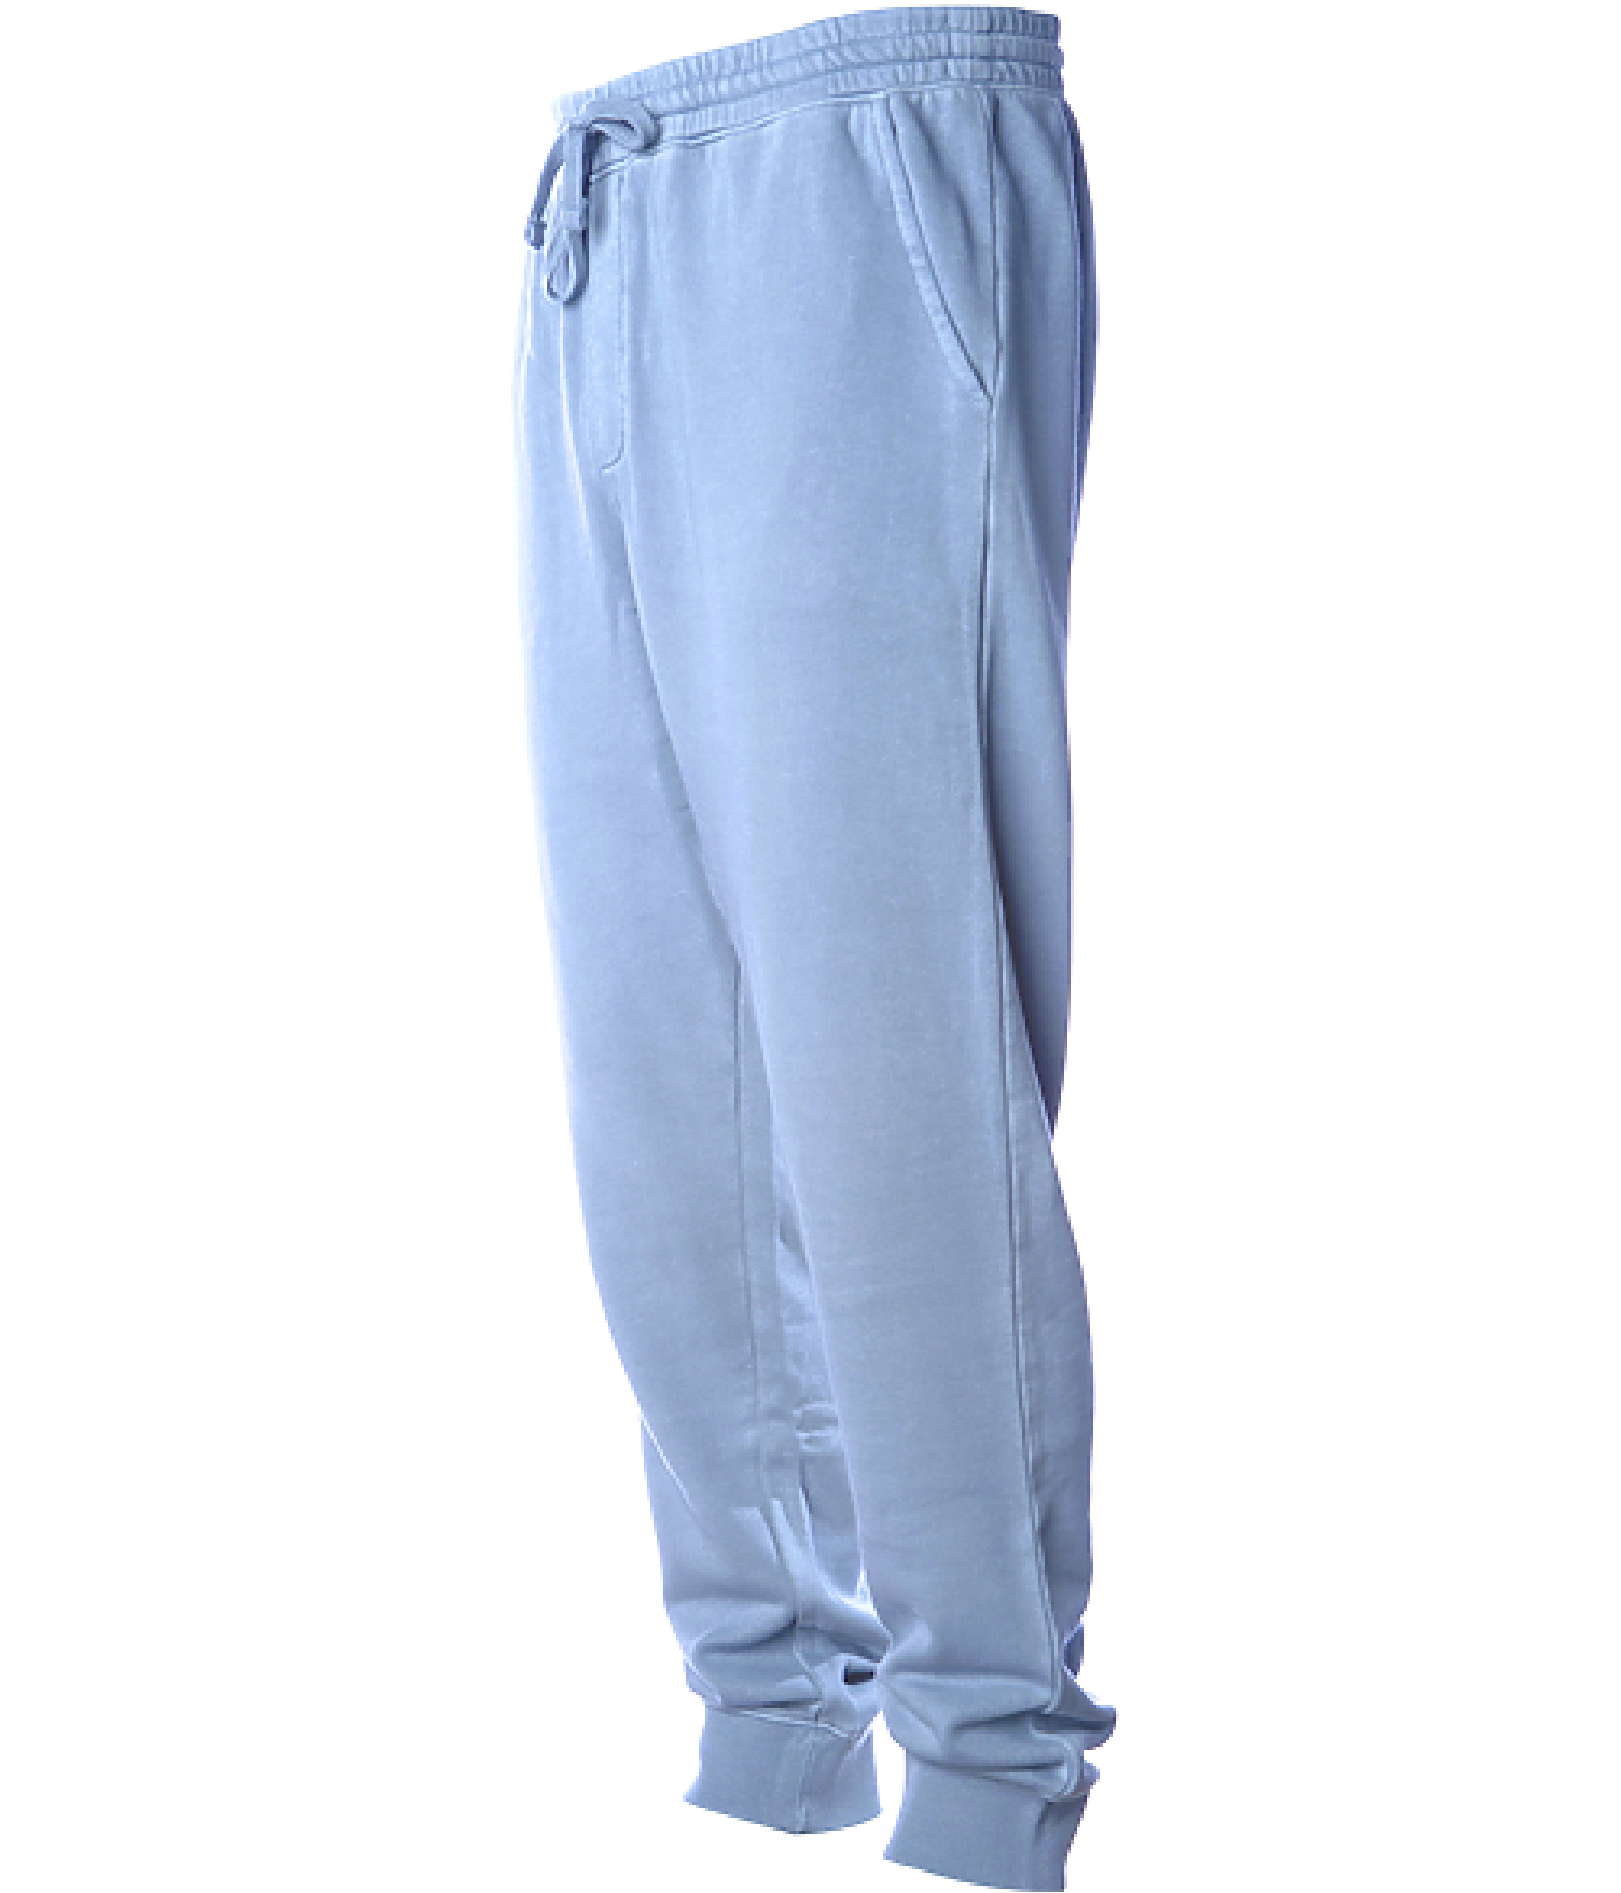 Phenomenally Soft Garment Dye Jogger Sweatpants (Light Blue